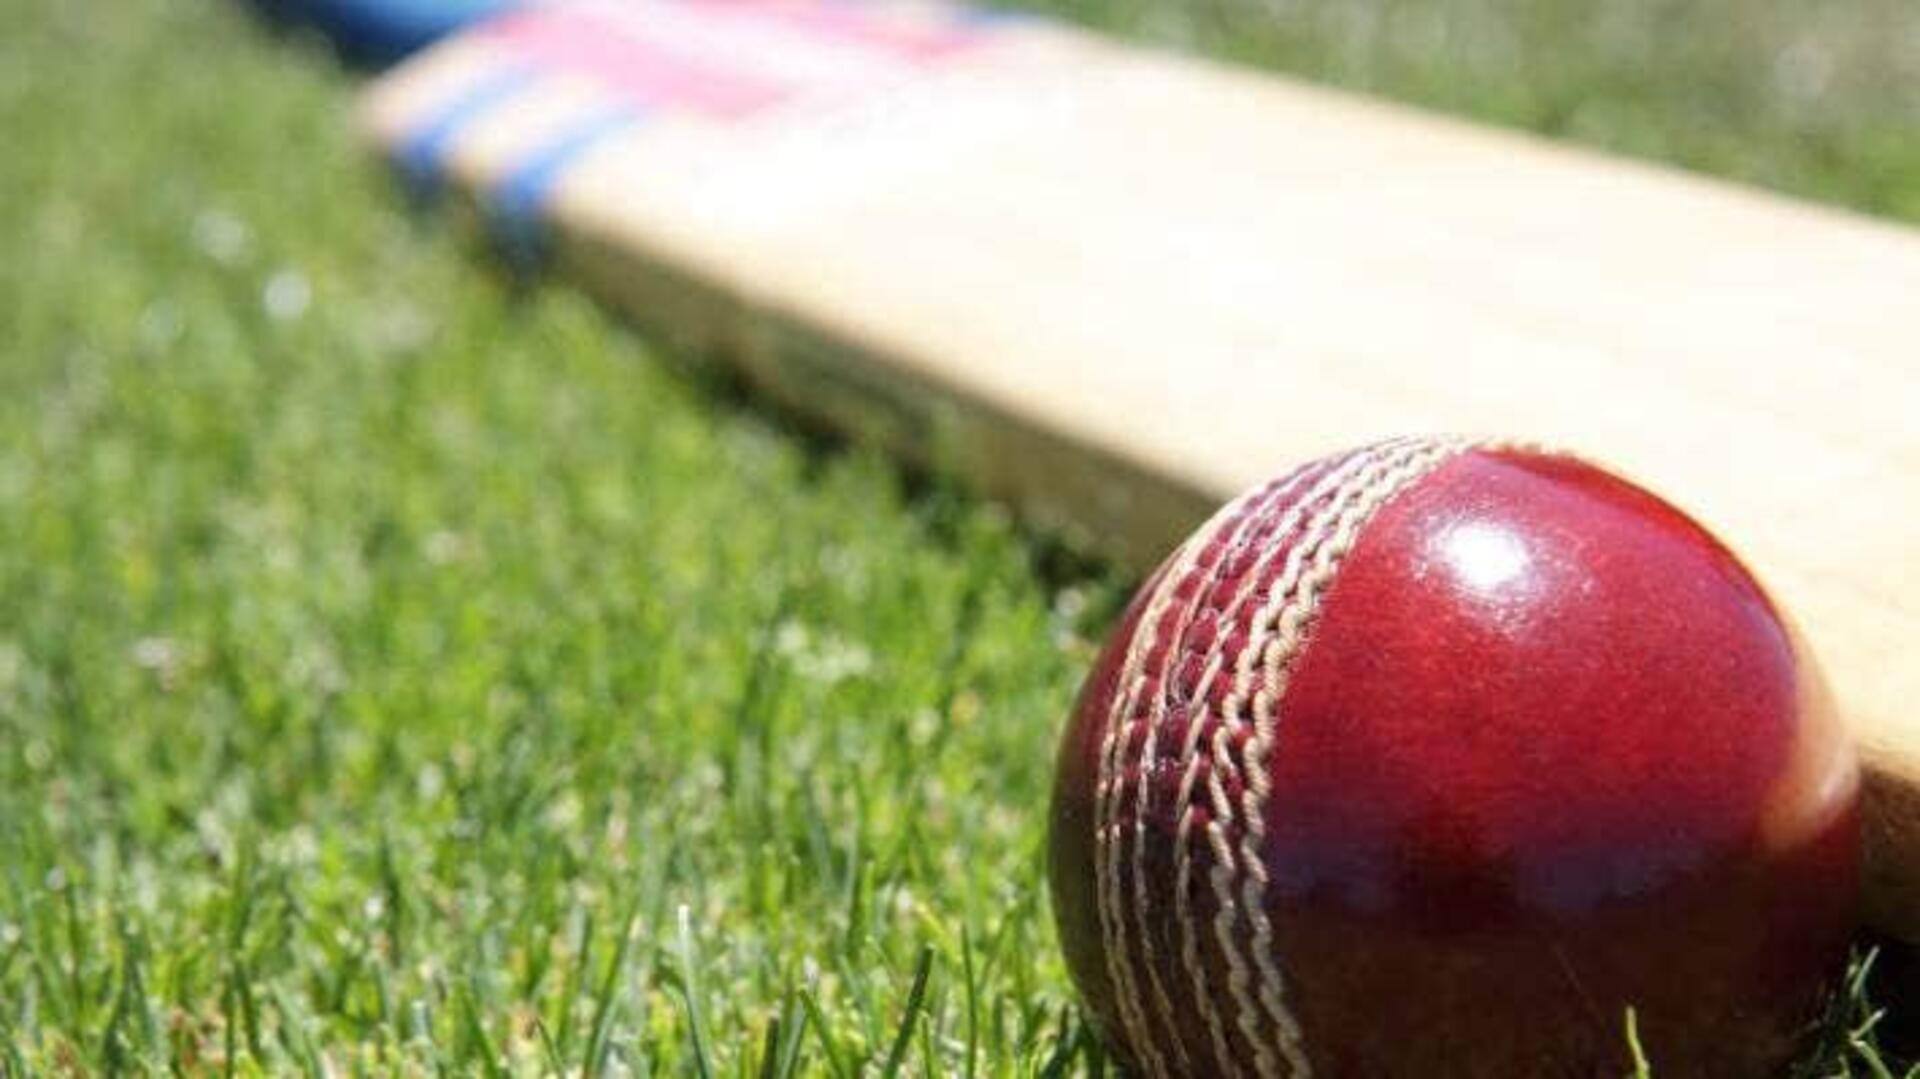 52-year-old Mumbai man dies during cricket match: Details here